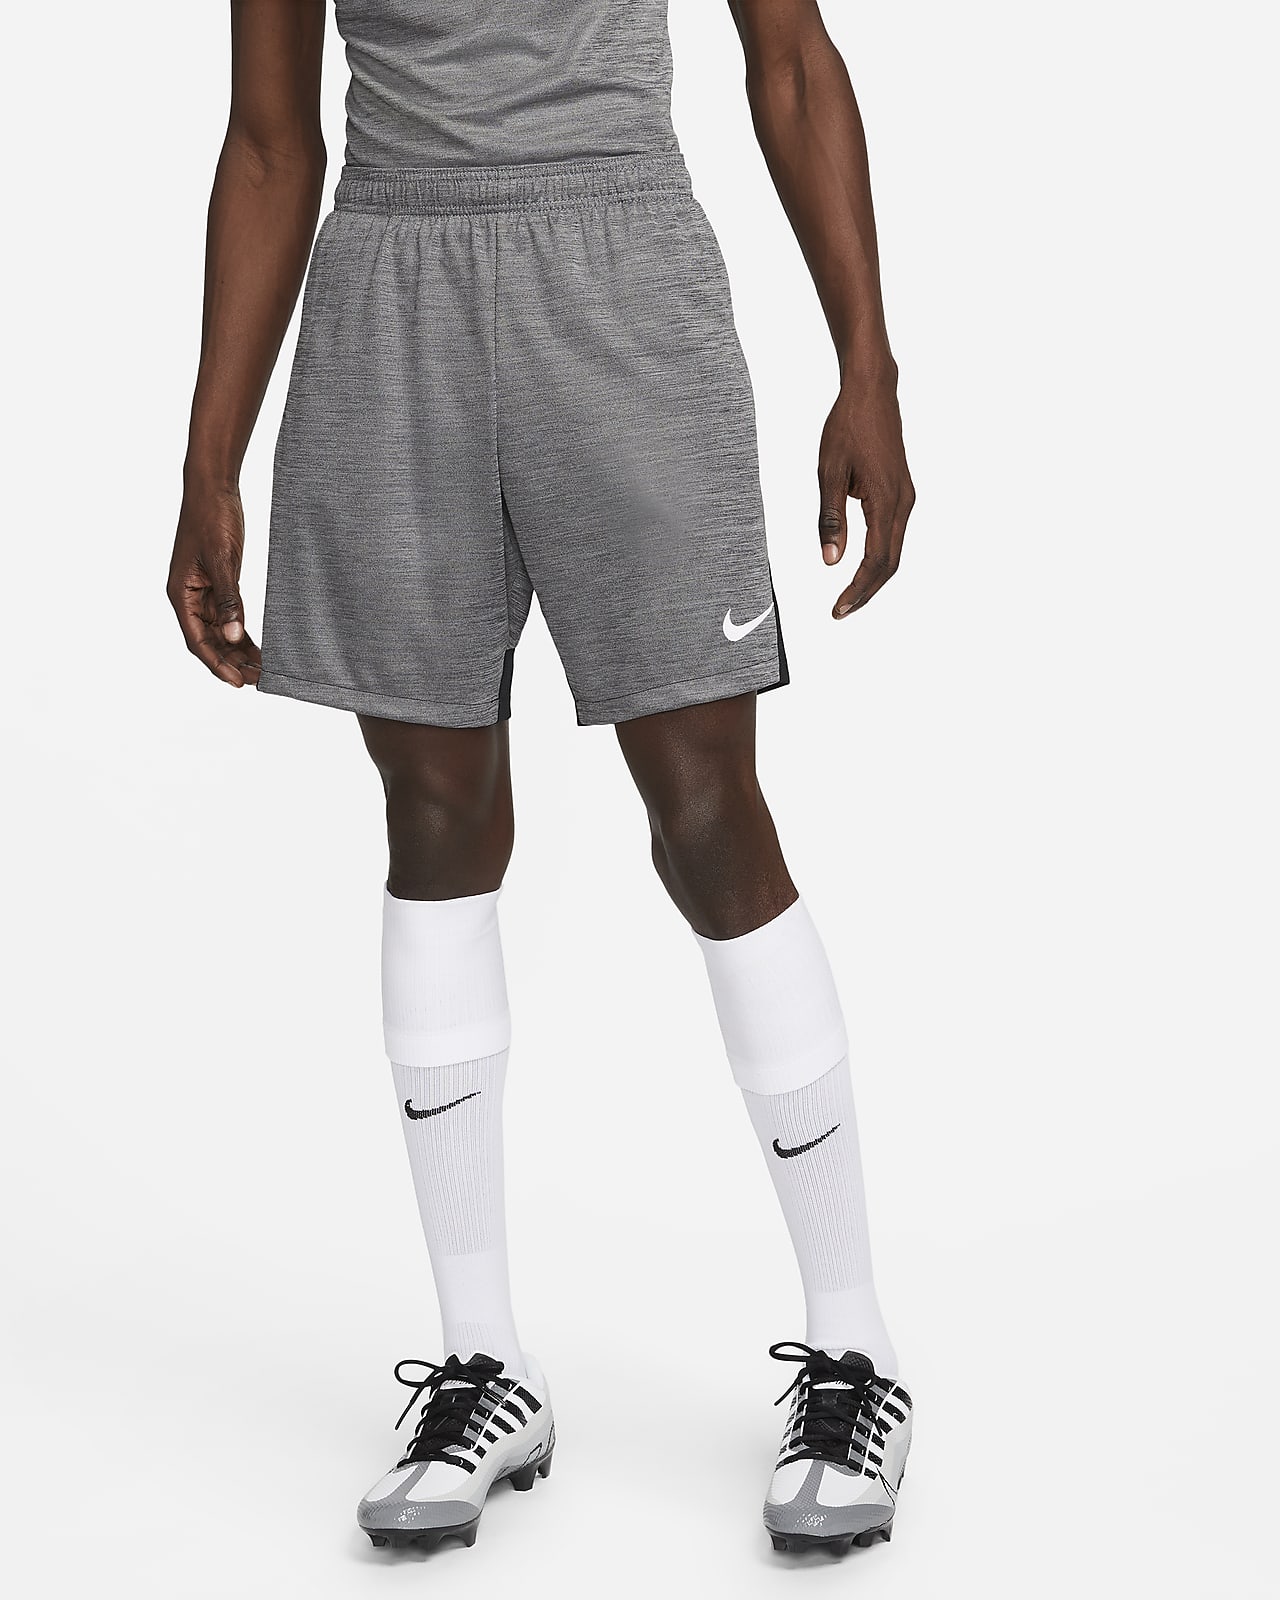 Nike Men's Dri-FIT Academy Soccer Track Pants